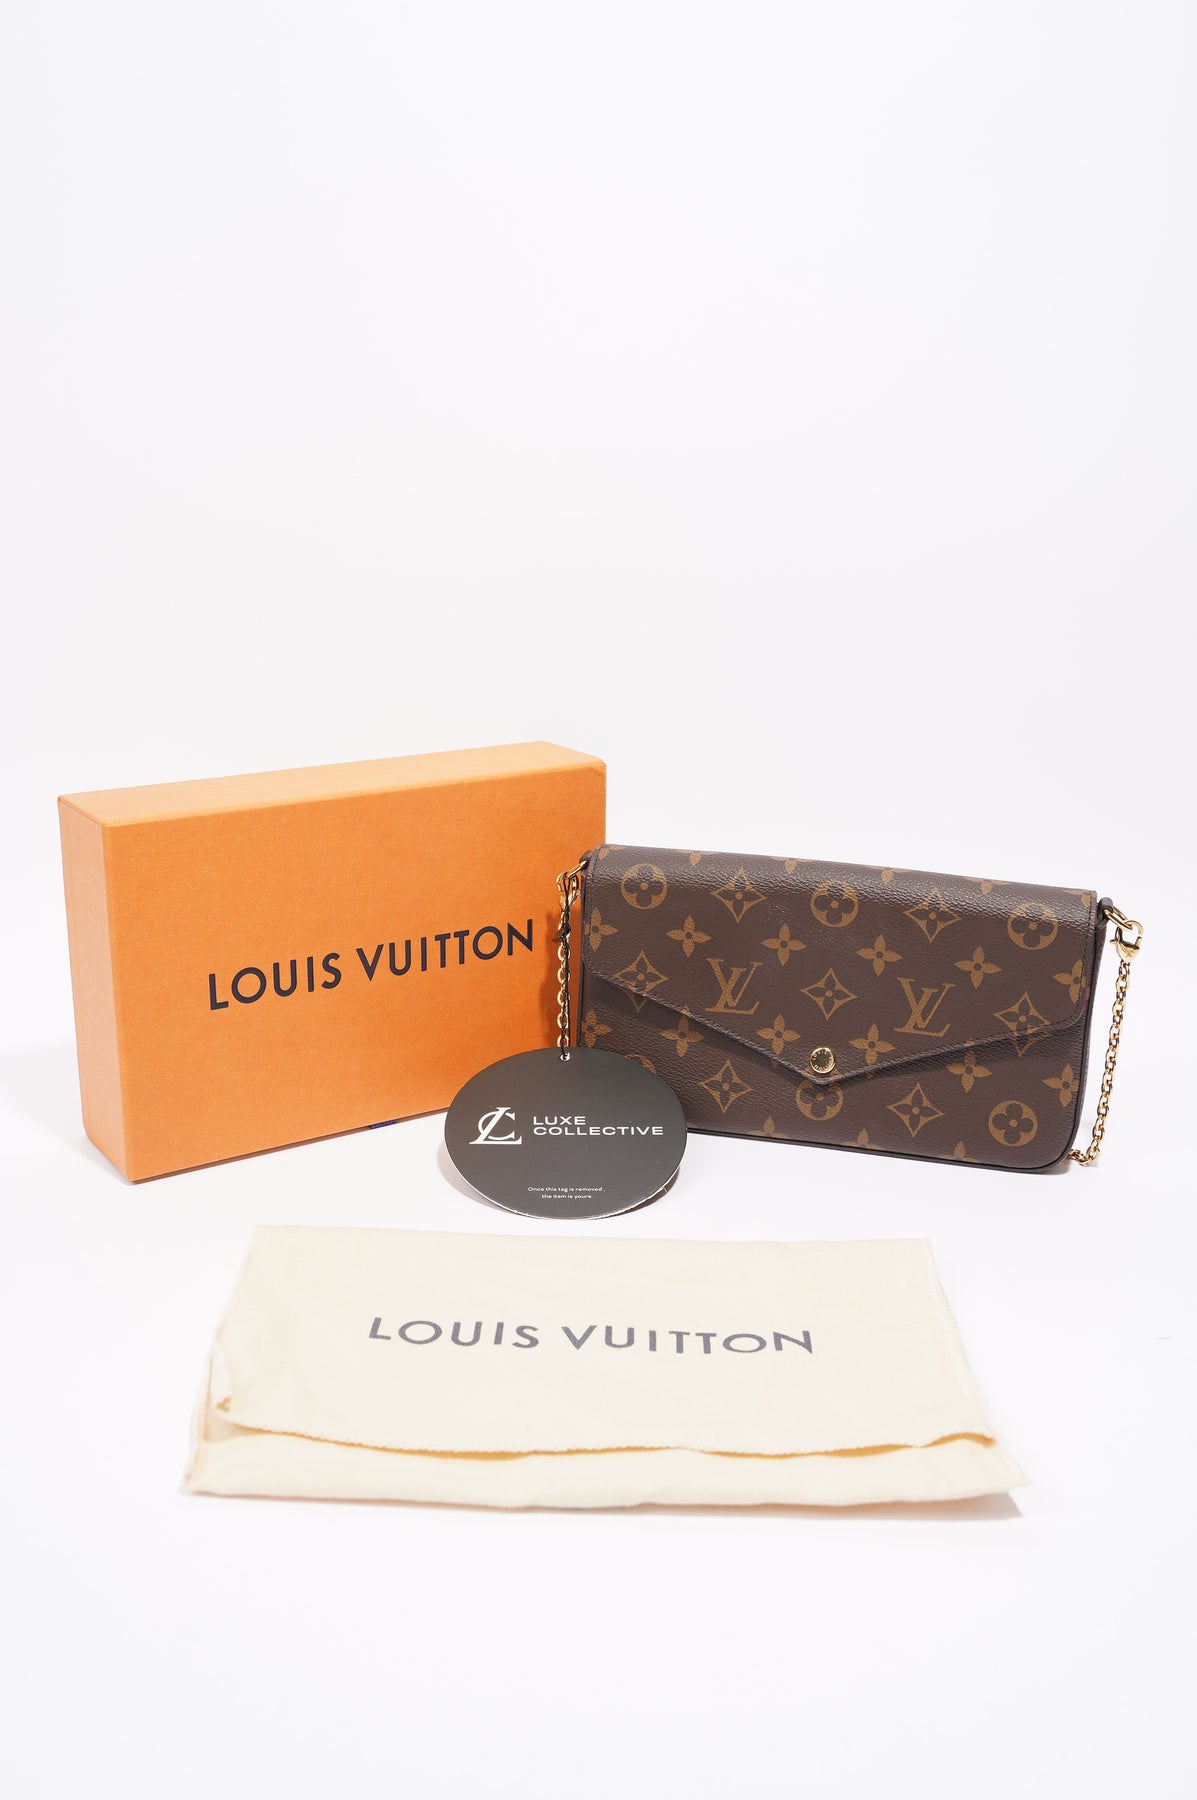 Monogram chain Louis Vuitton - Vinted